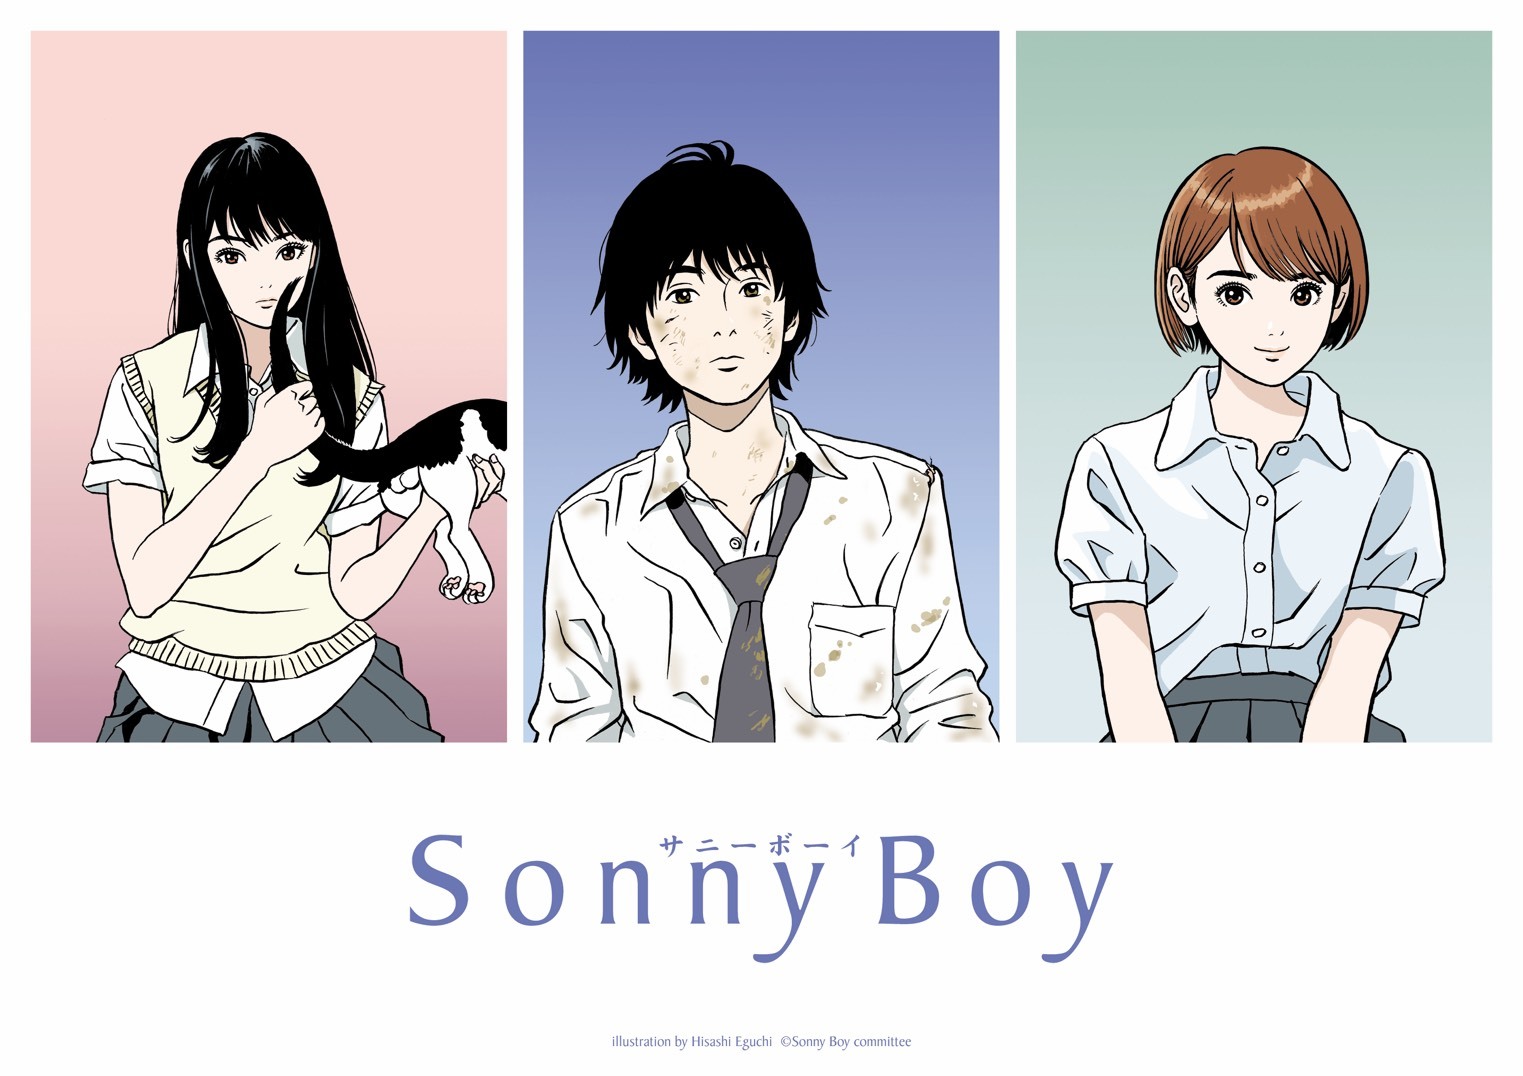  （C）Sonny Boy committee